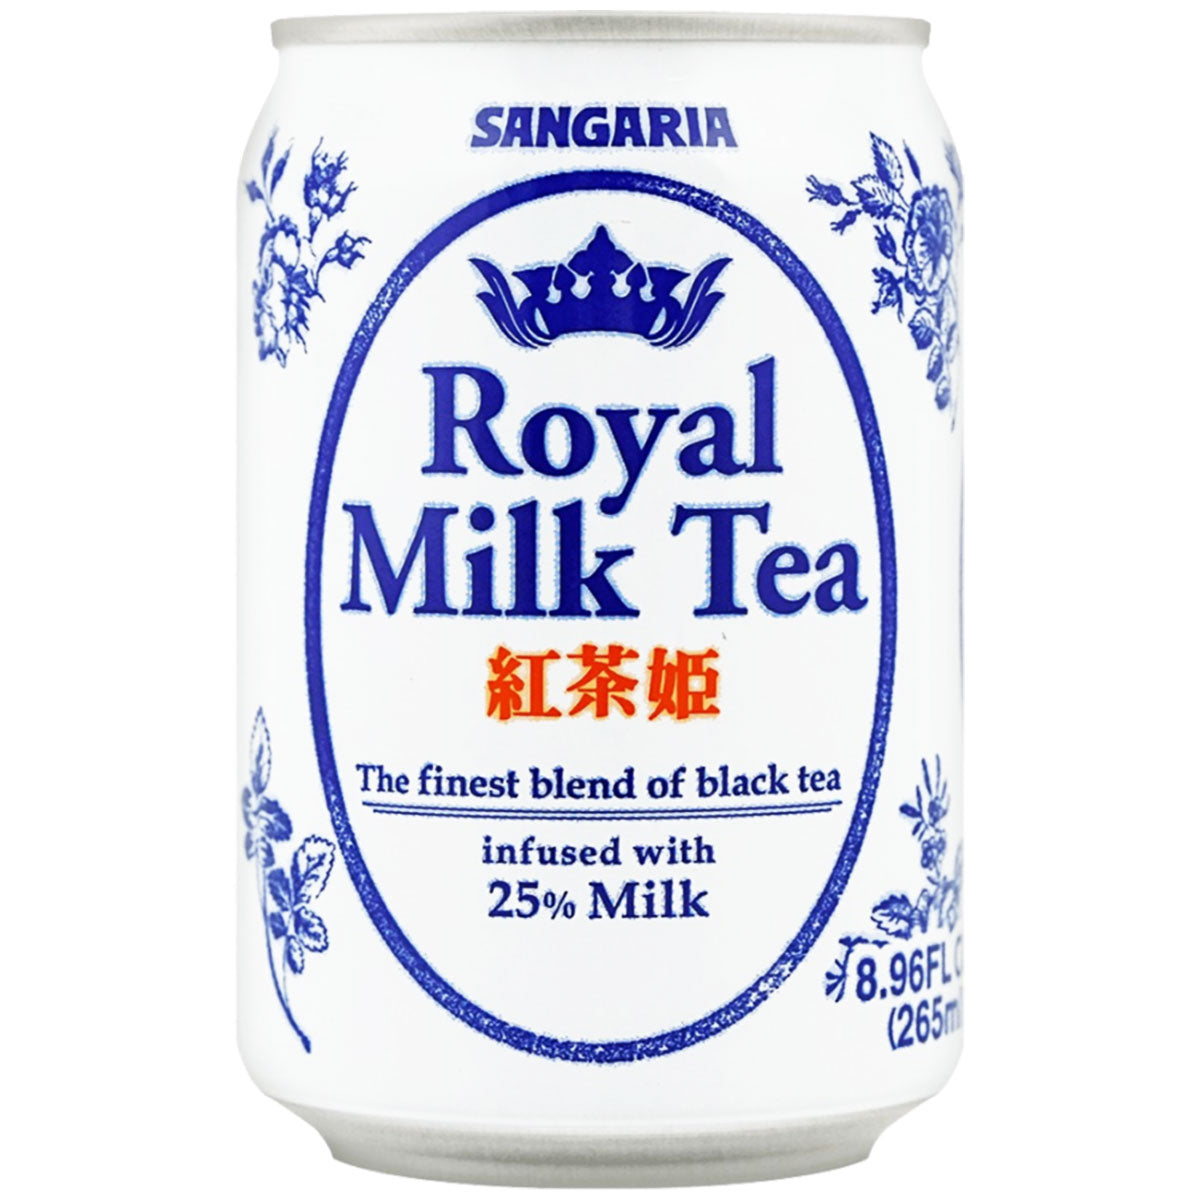 Sangaria Royal Milk Tea - 8.96fl oz